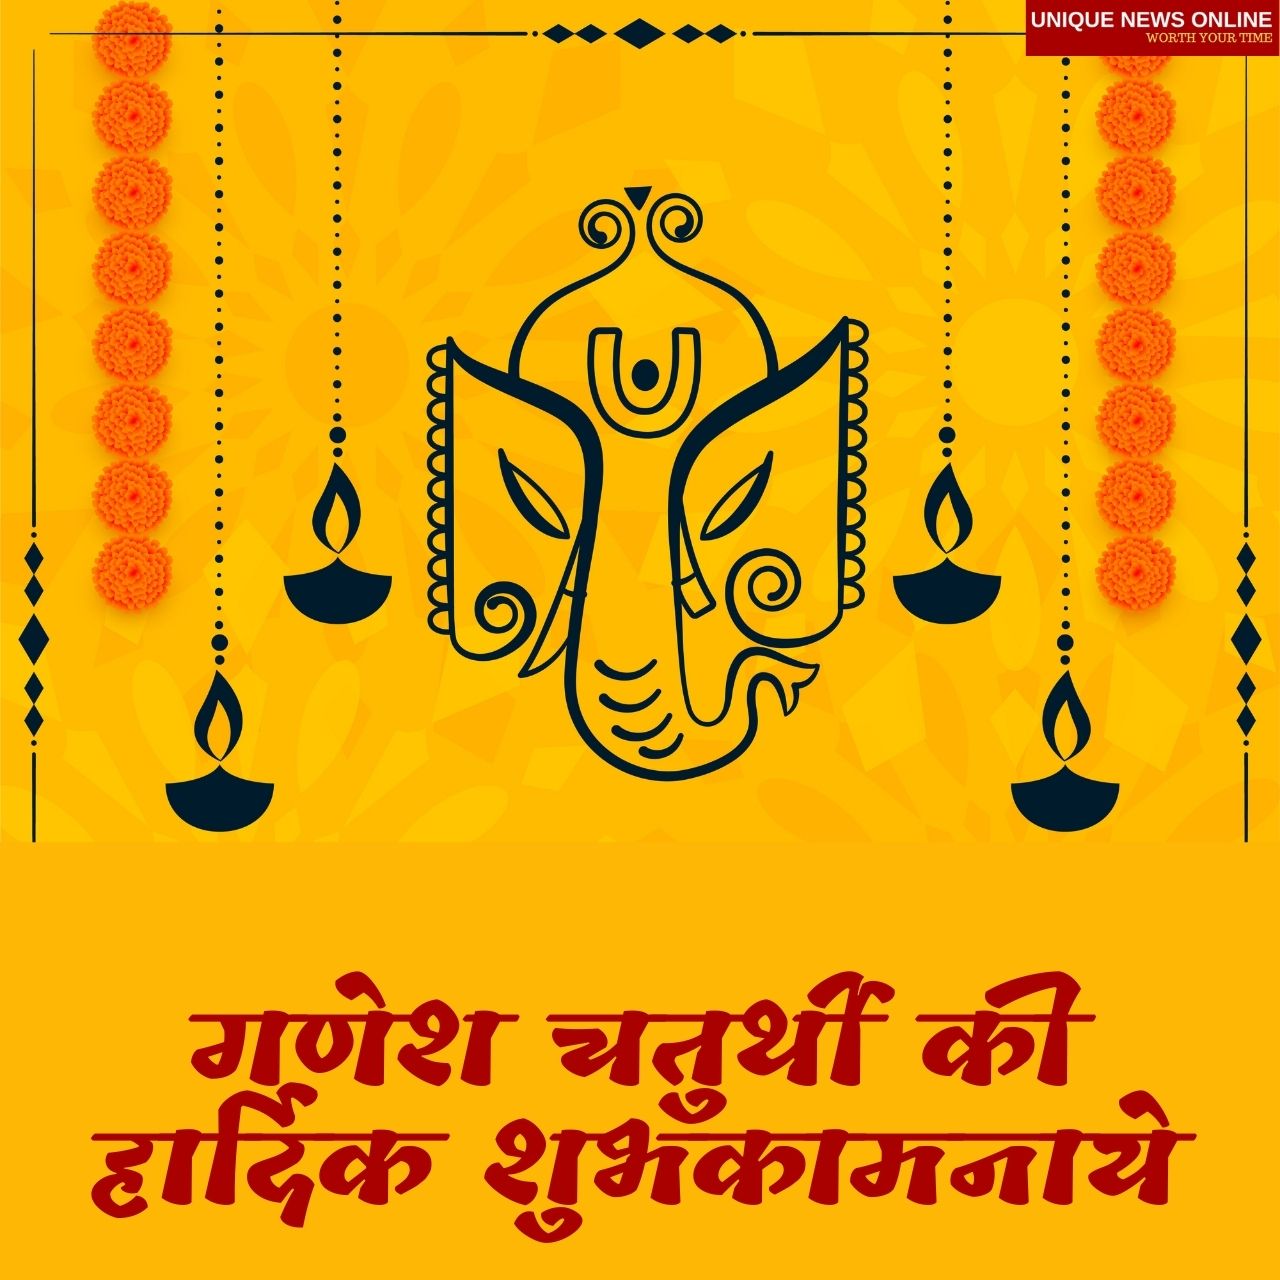 Ganesh Chaturthi ki Hardik Shubhkamnaye 2021 Hindi Wishes, Quotes, Wallpaper, Messages, Greetings, Poster, PNG Images, and Status to share